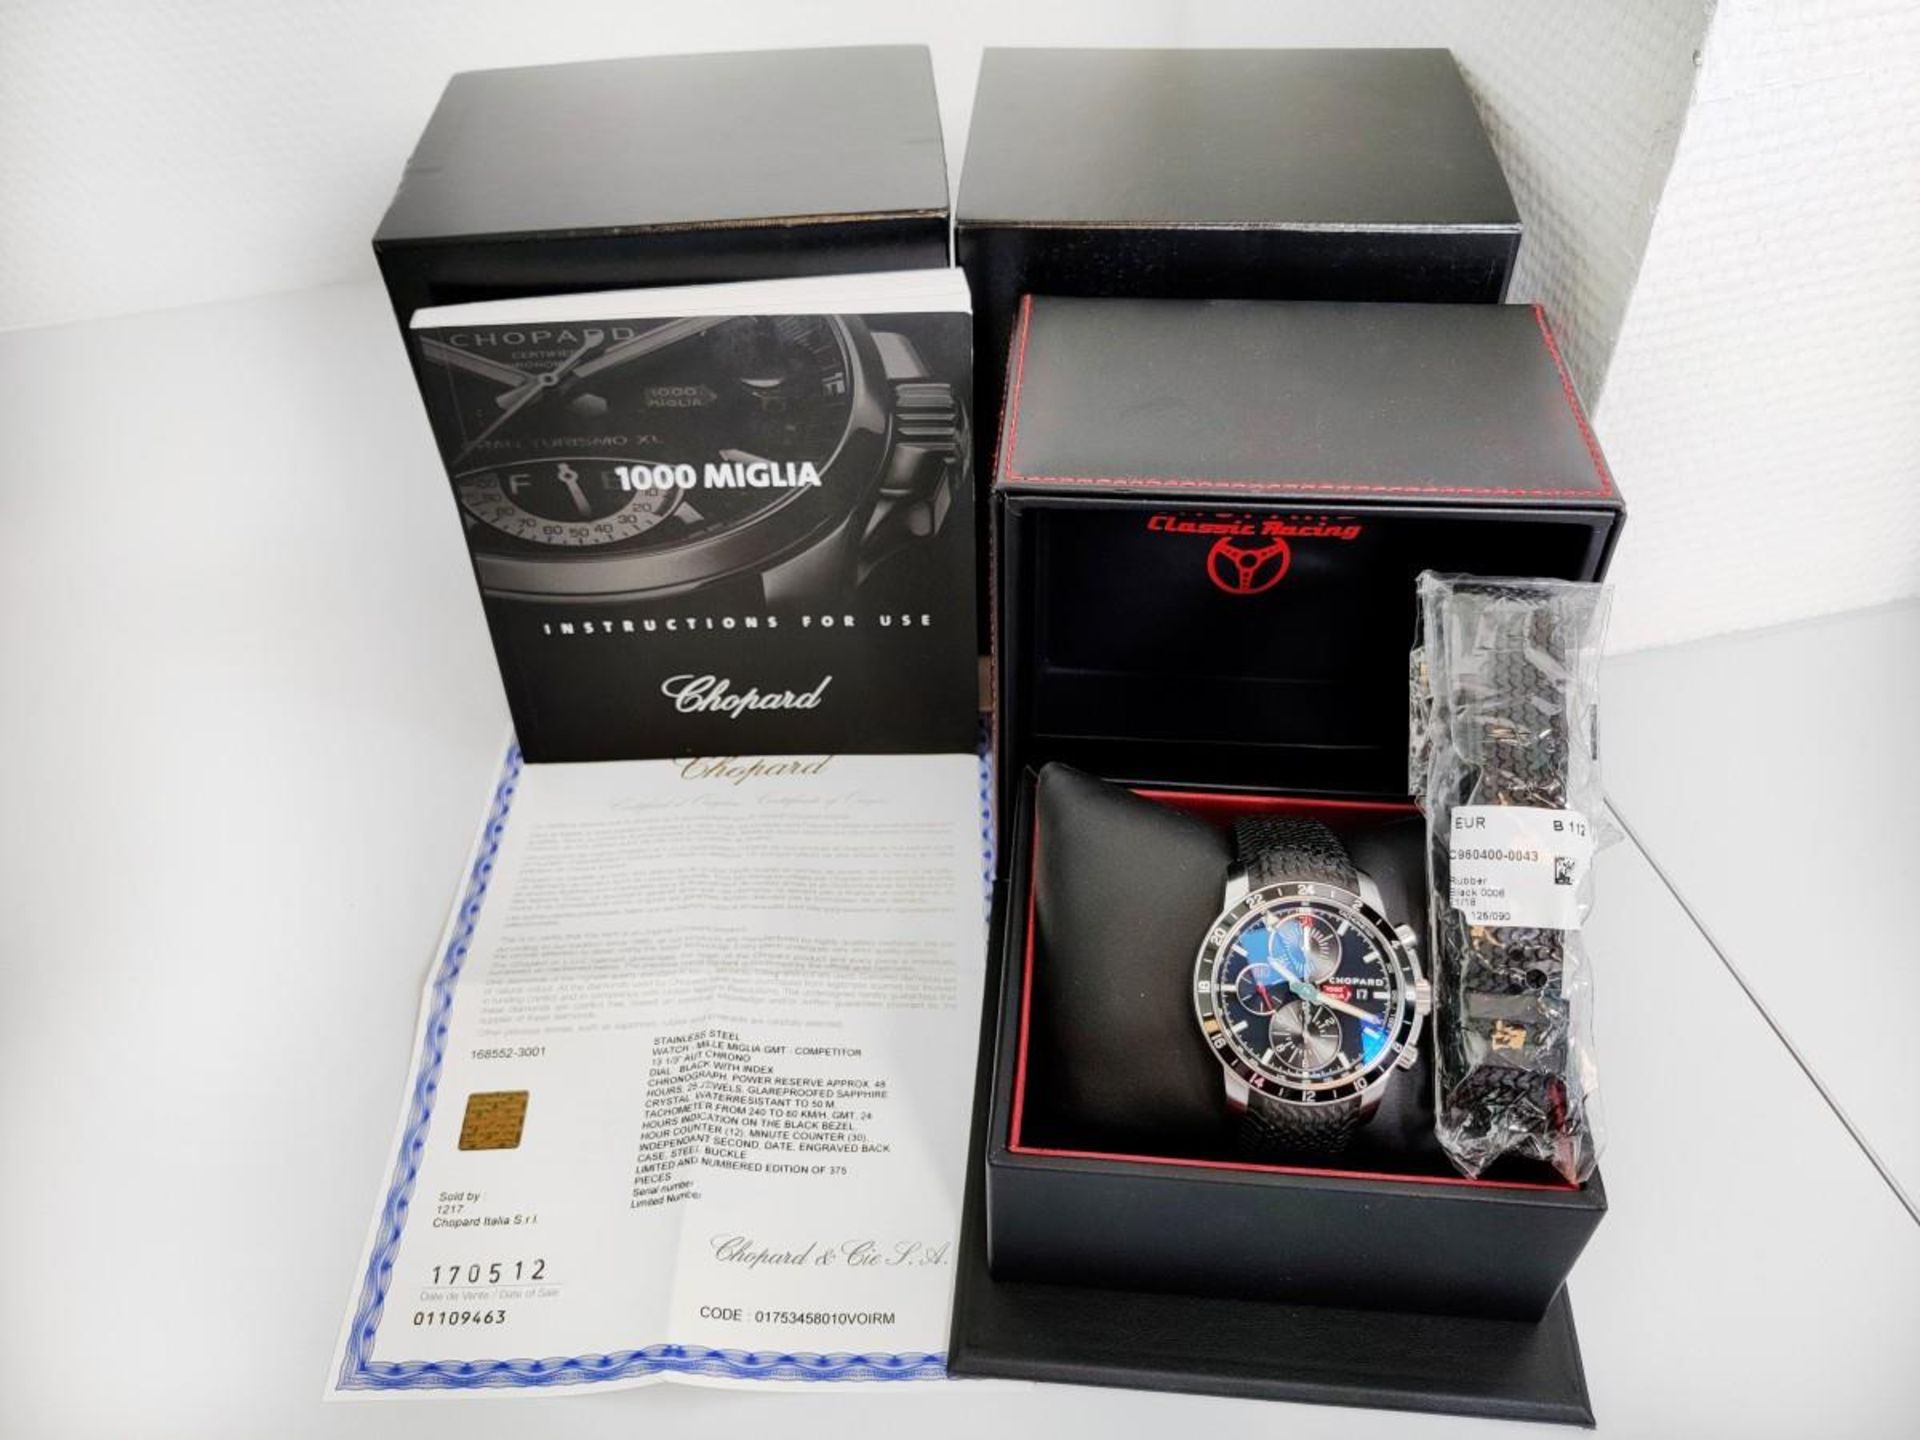 Chopard Mille Miglia 1000 - 8552 - Men's watch - 2012. - Image 6 of 6